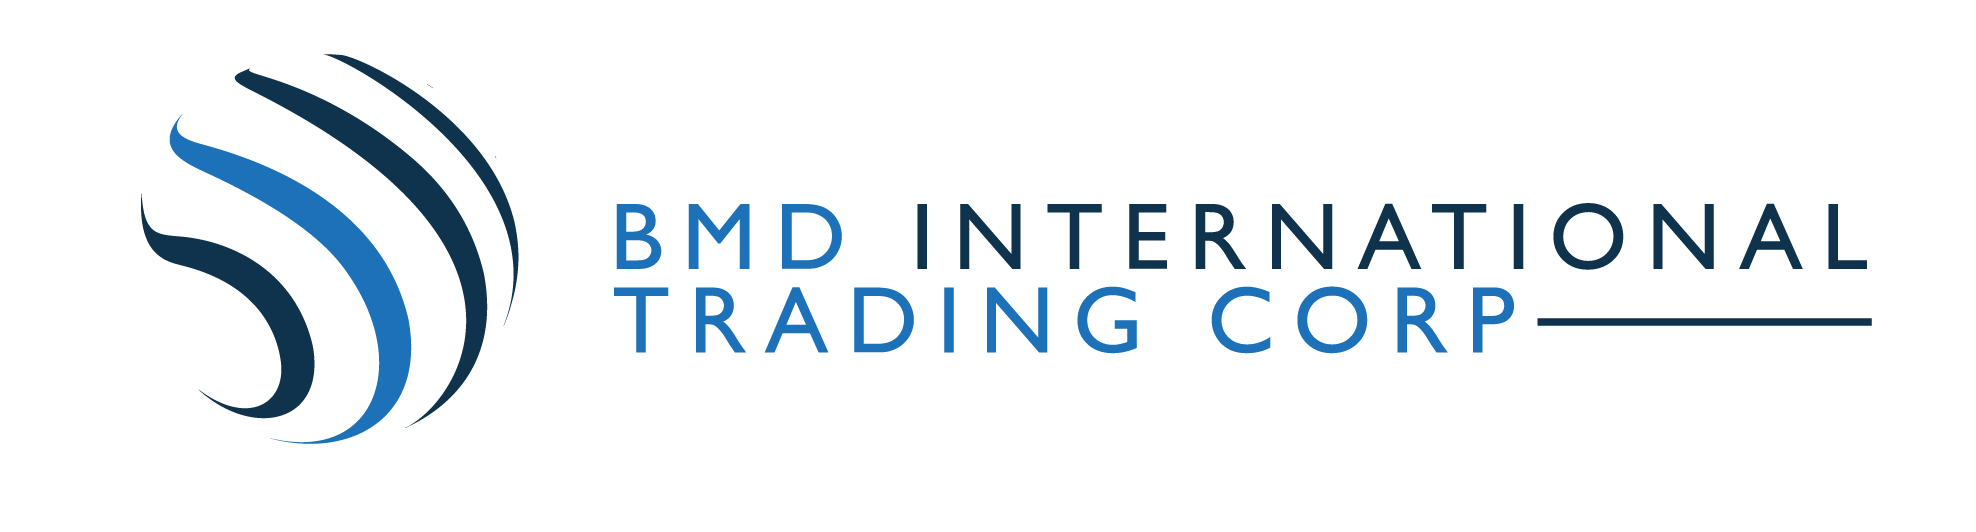 BMD International Trading Corp